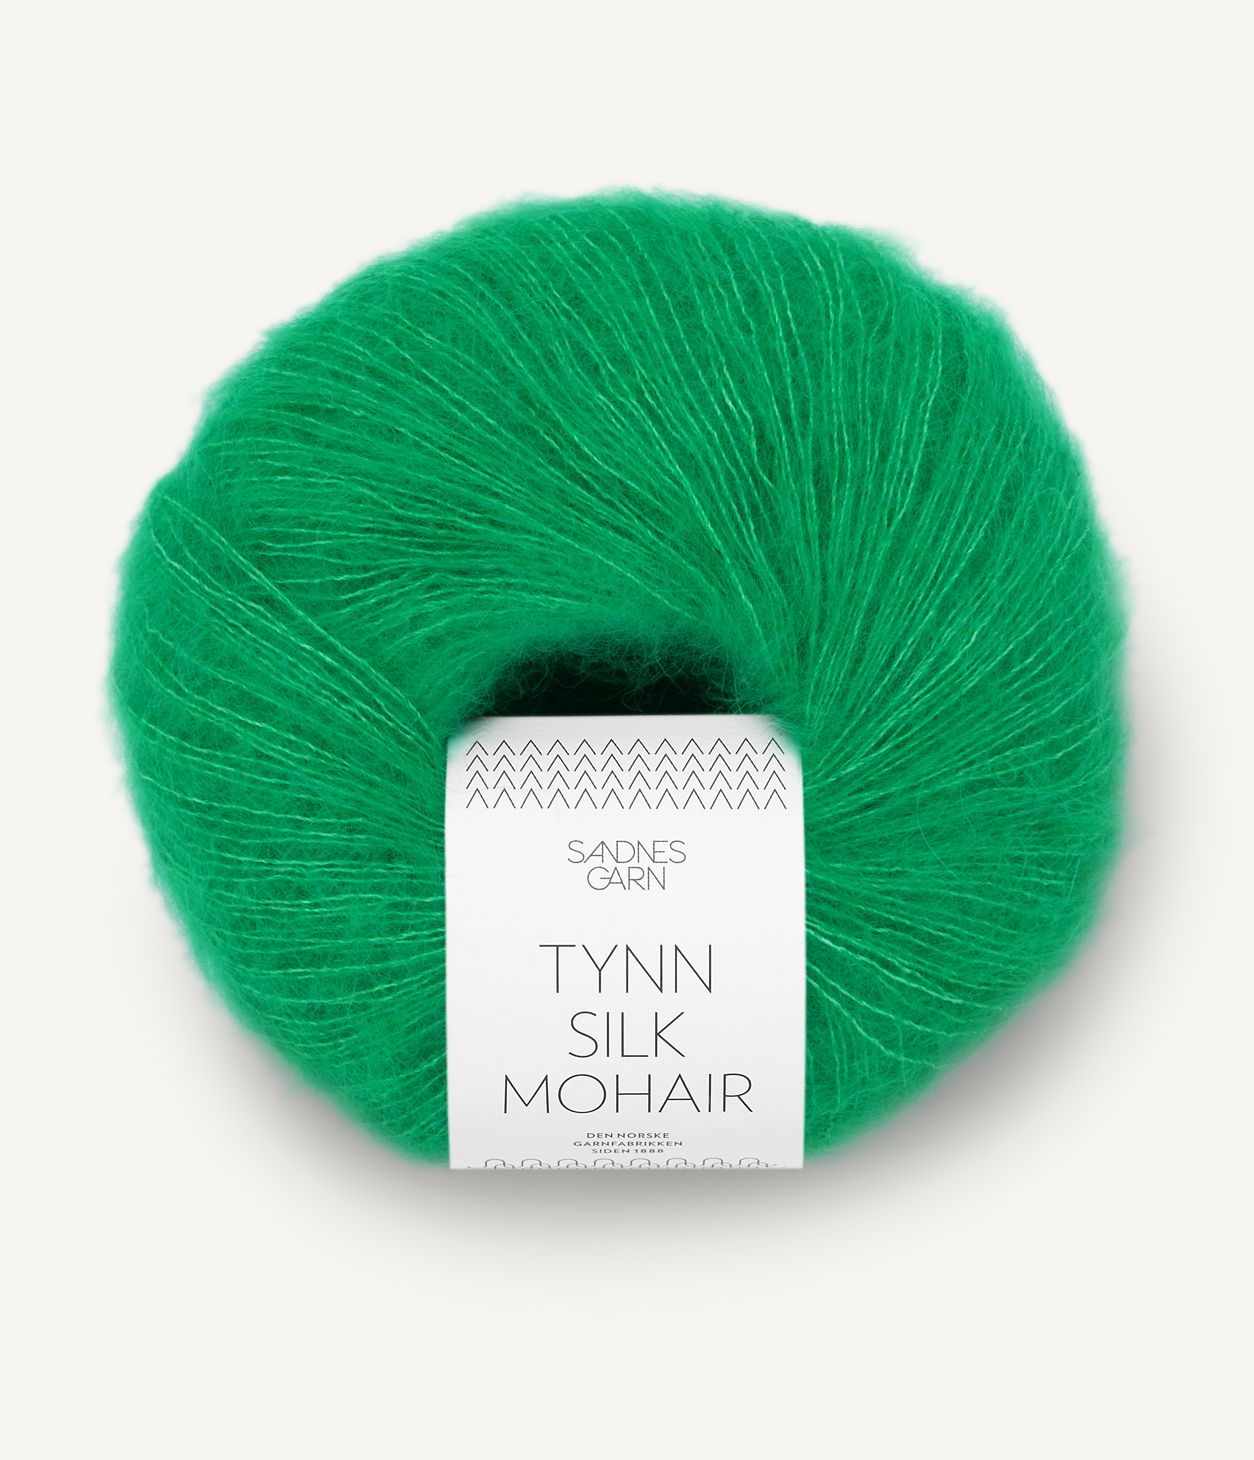 Sandnes Garn Tynn Silk Mohair - 25g